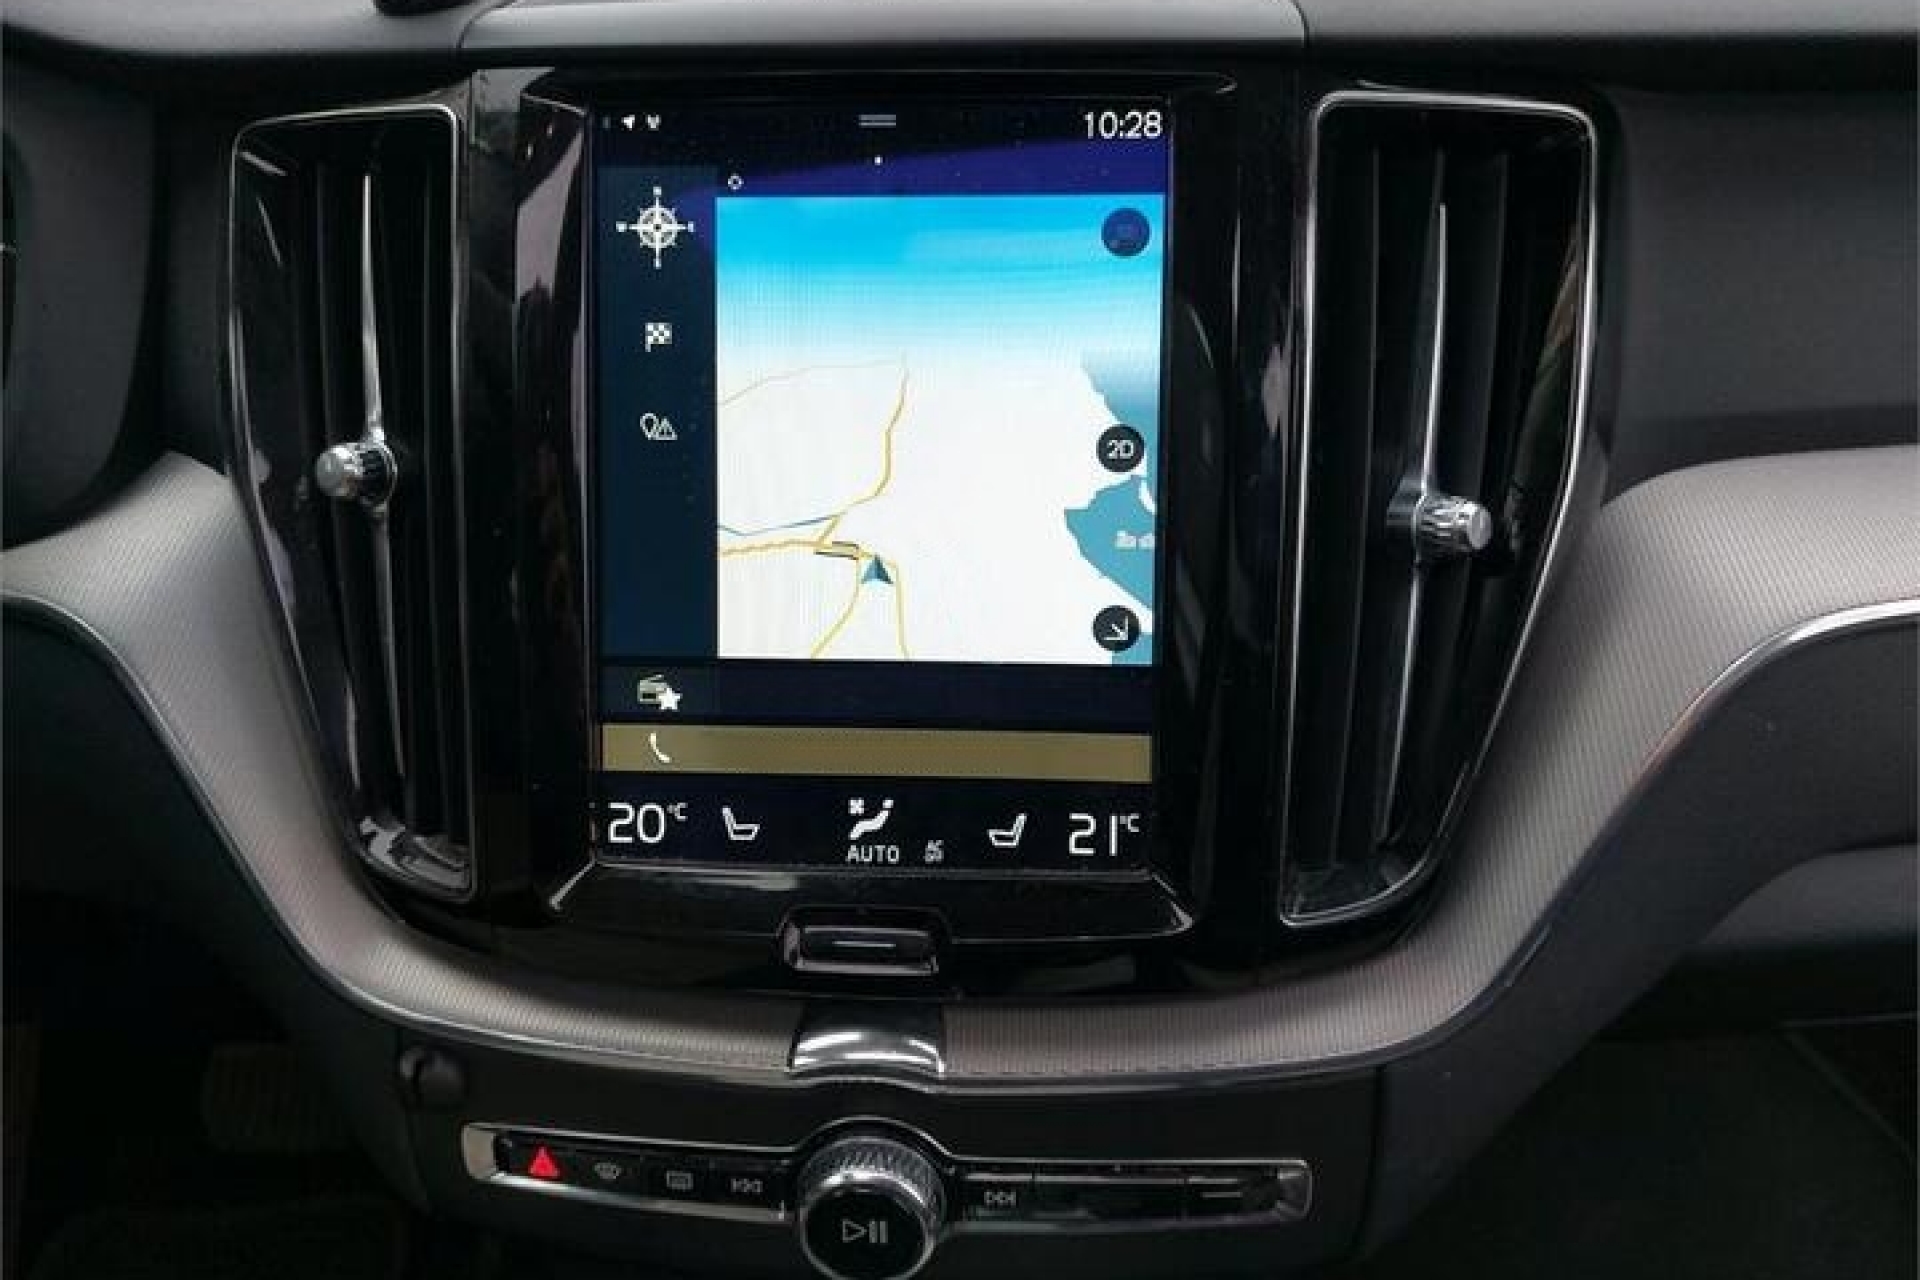 Volvo XC60 2.0 D4 AWD 4x4 Automatik-Geartronic 190 KS INSCRIPTION Virtual Cockpit Navigacija 2xParktronic Kamera Panorama ACC-System Max-Voll New Modell 2018